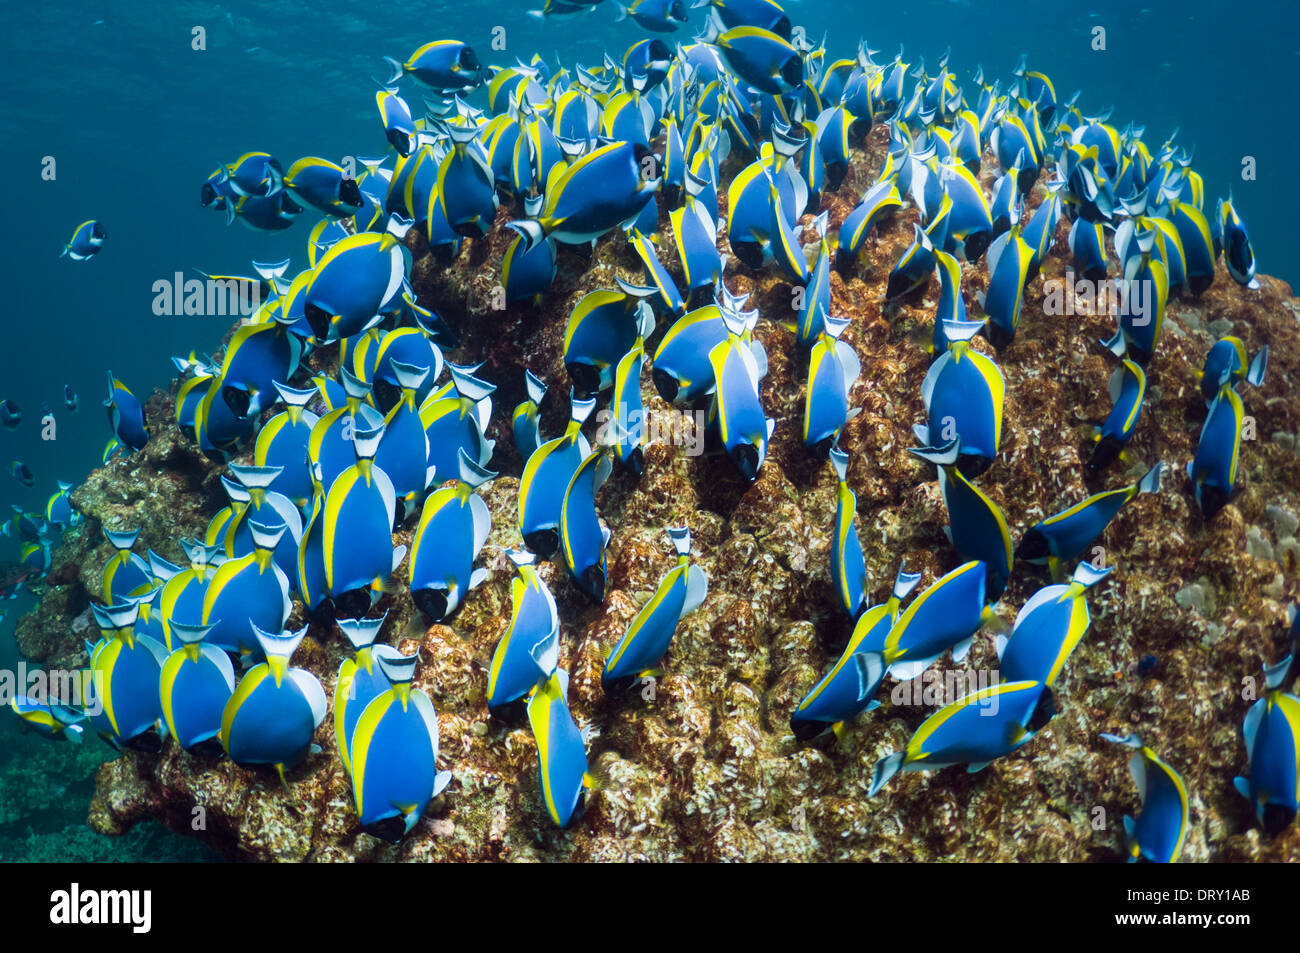 El Pez Cirujano azul de polvo (Acanthurus leucosternon), alimentación escolar grande de algas en rocas de coral. Mar de Andamán, Tailandia. Foto de stock